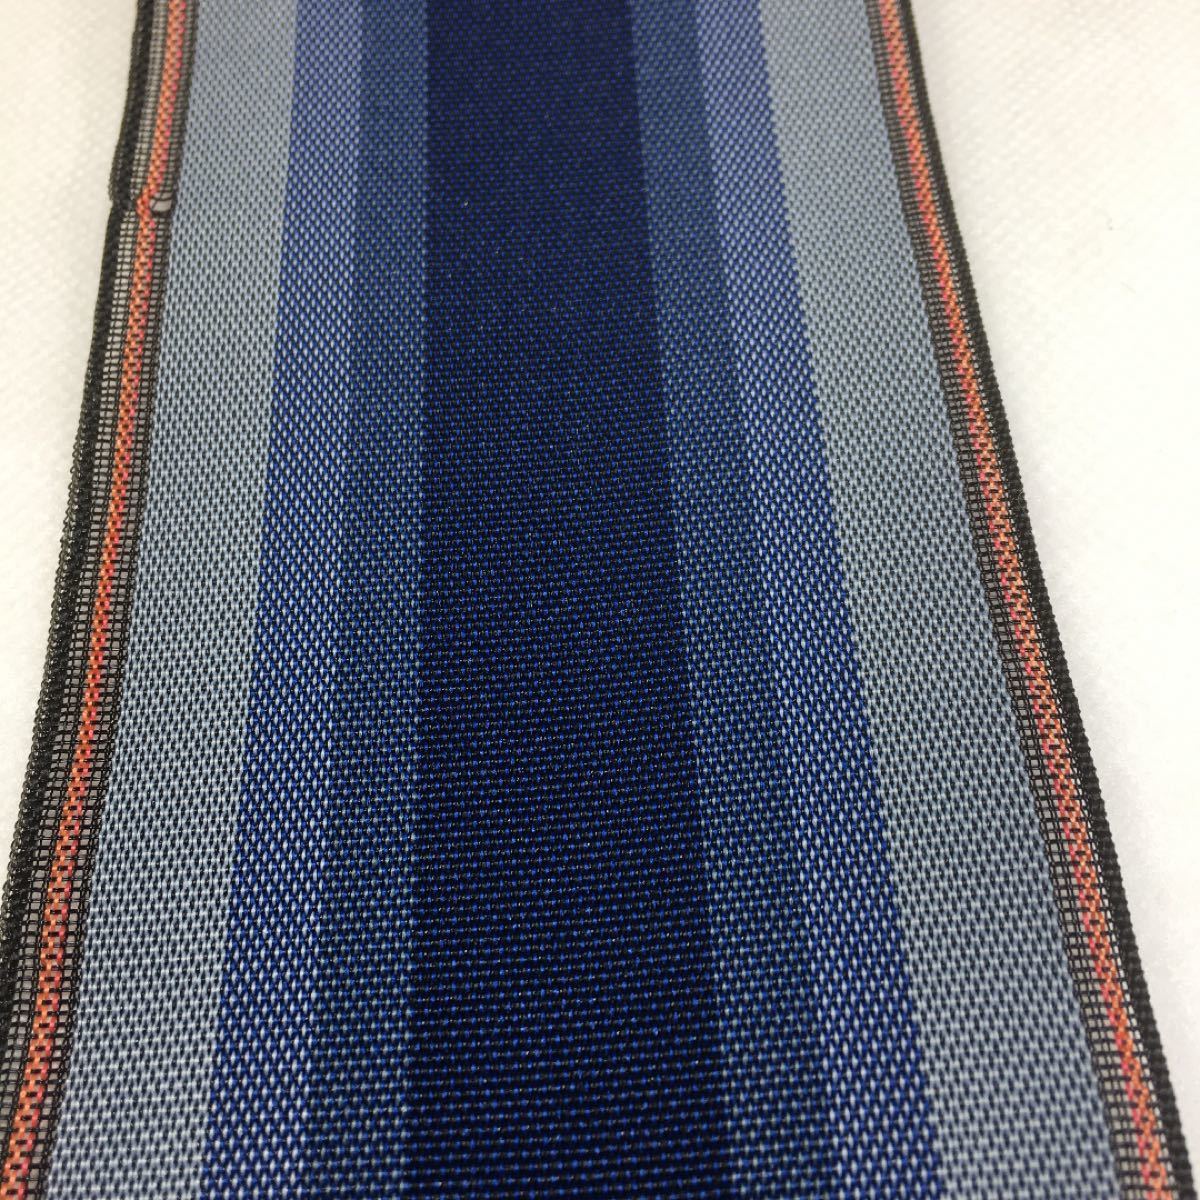 k-16 ブルー系グラデーション2m畳へり畳ヘリ畳縁畳のへり着物和風生地バッグハンドメイドリメイク髪飾り生地はぎれお守り